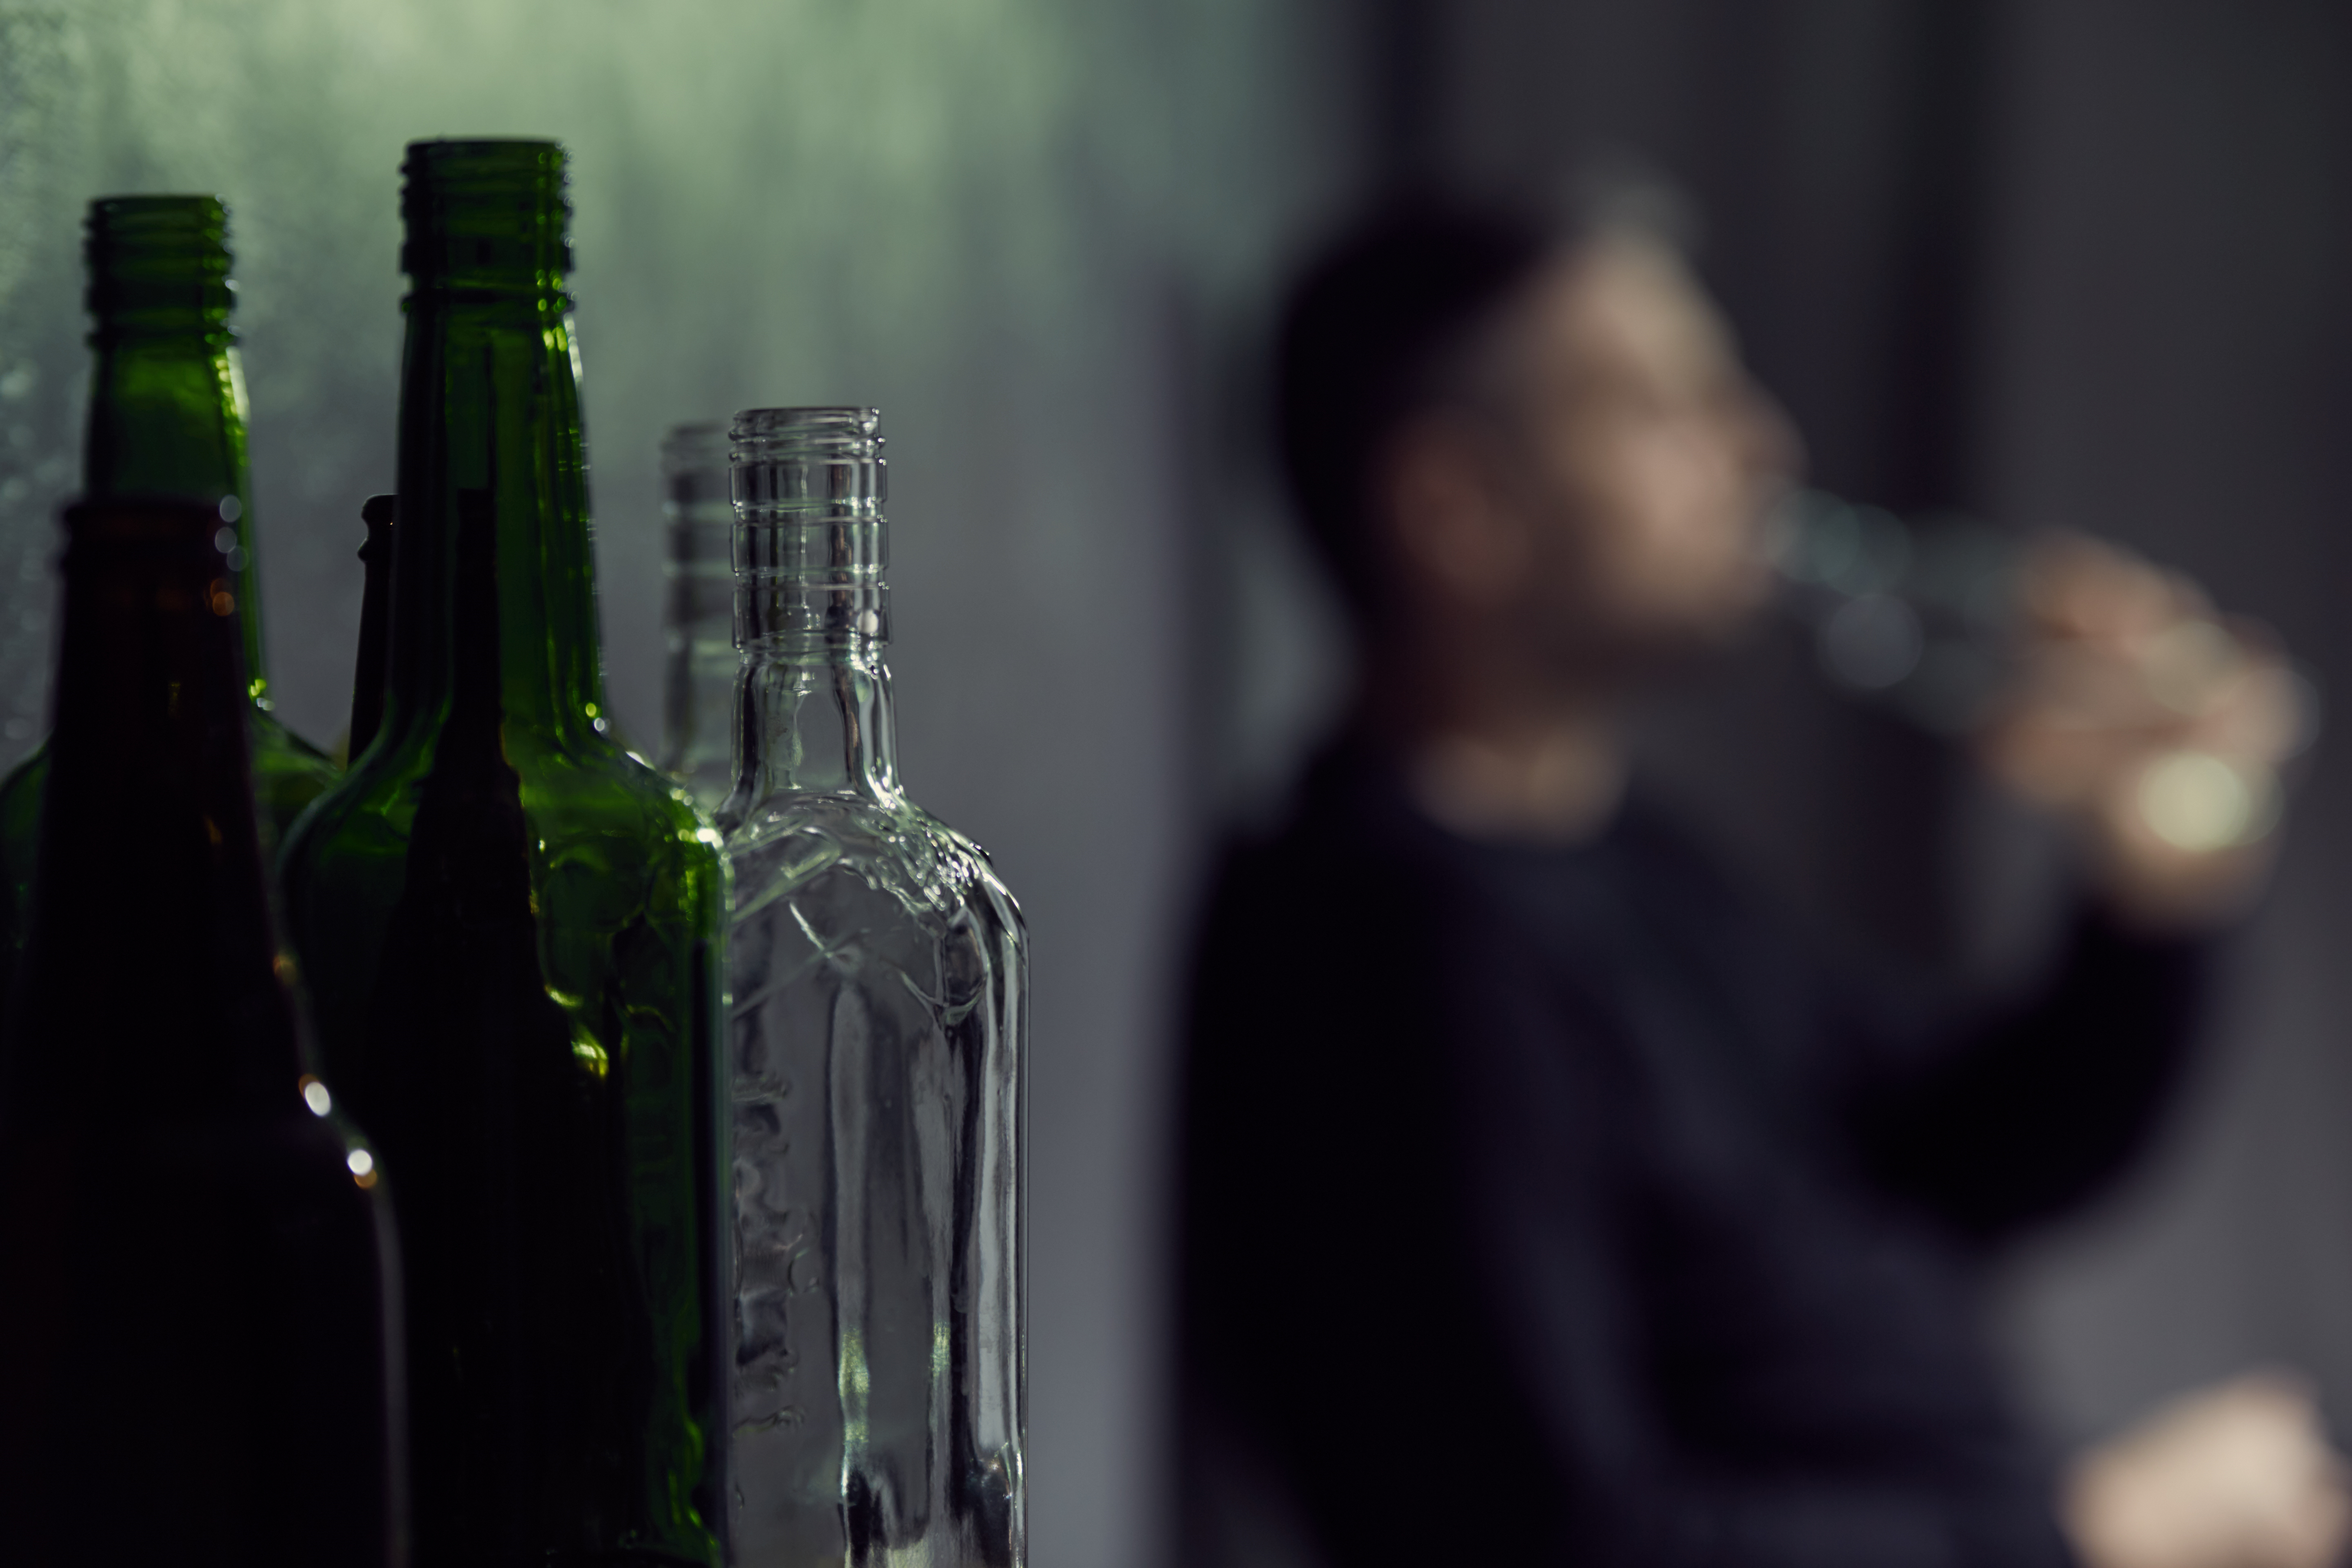 Bottles | Source: Shutterstock